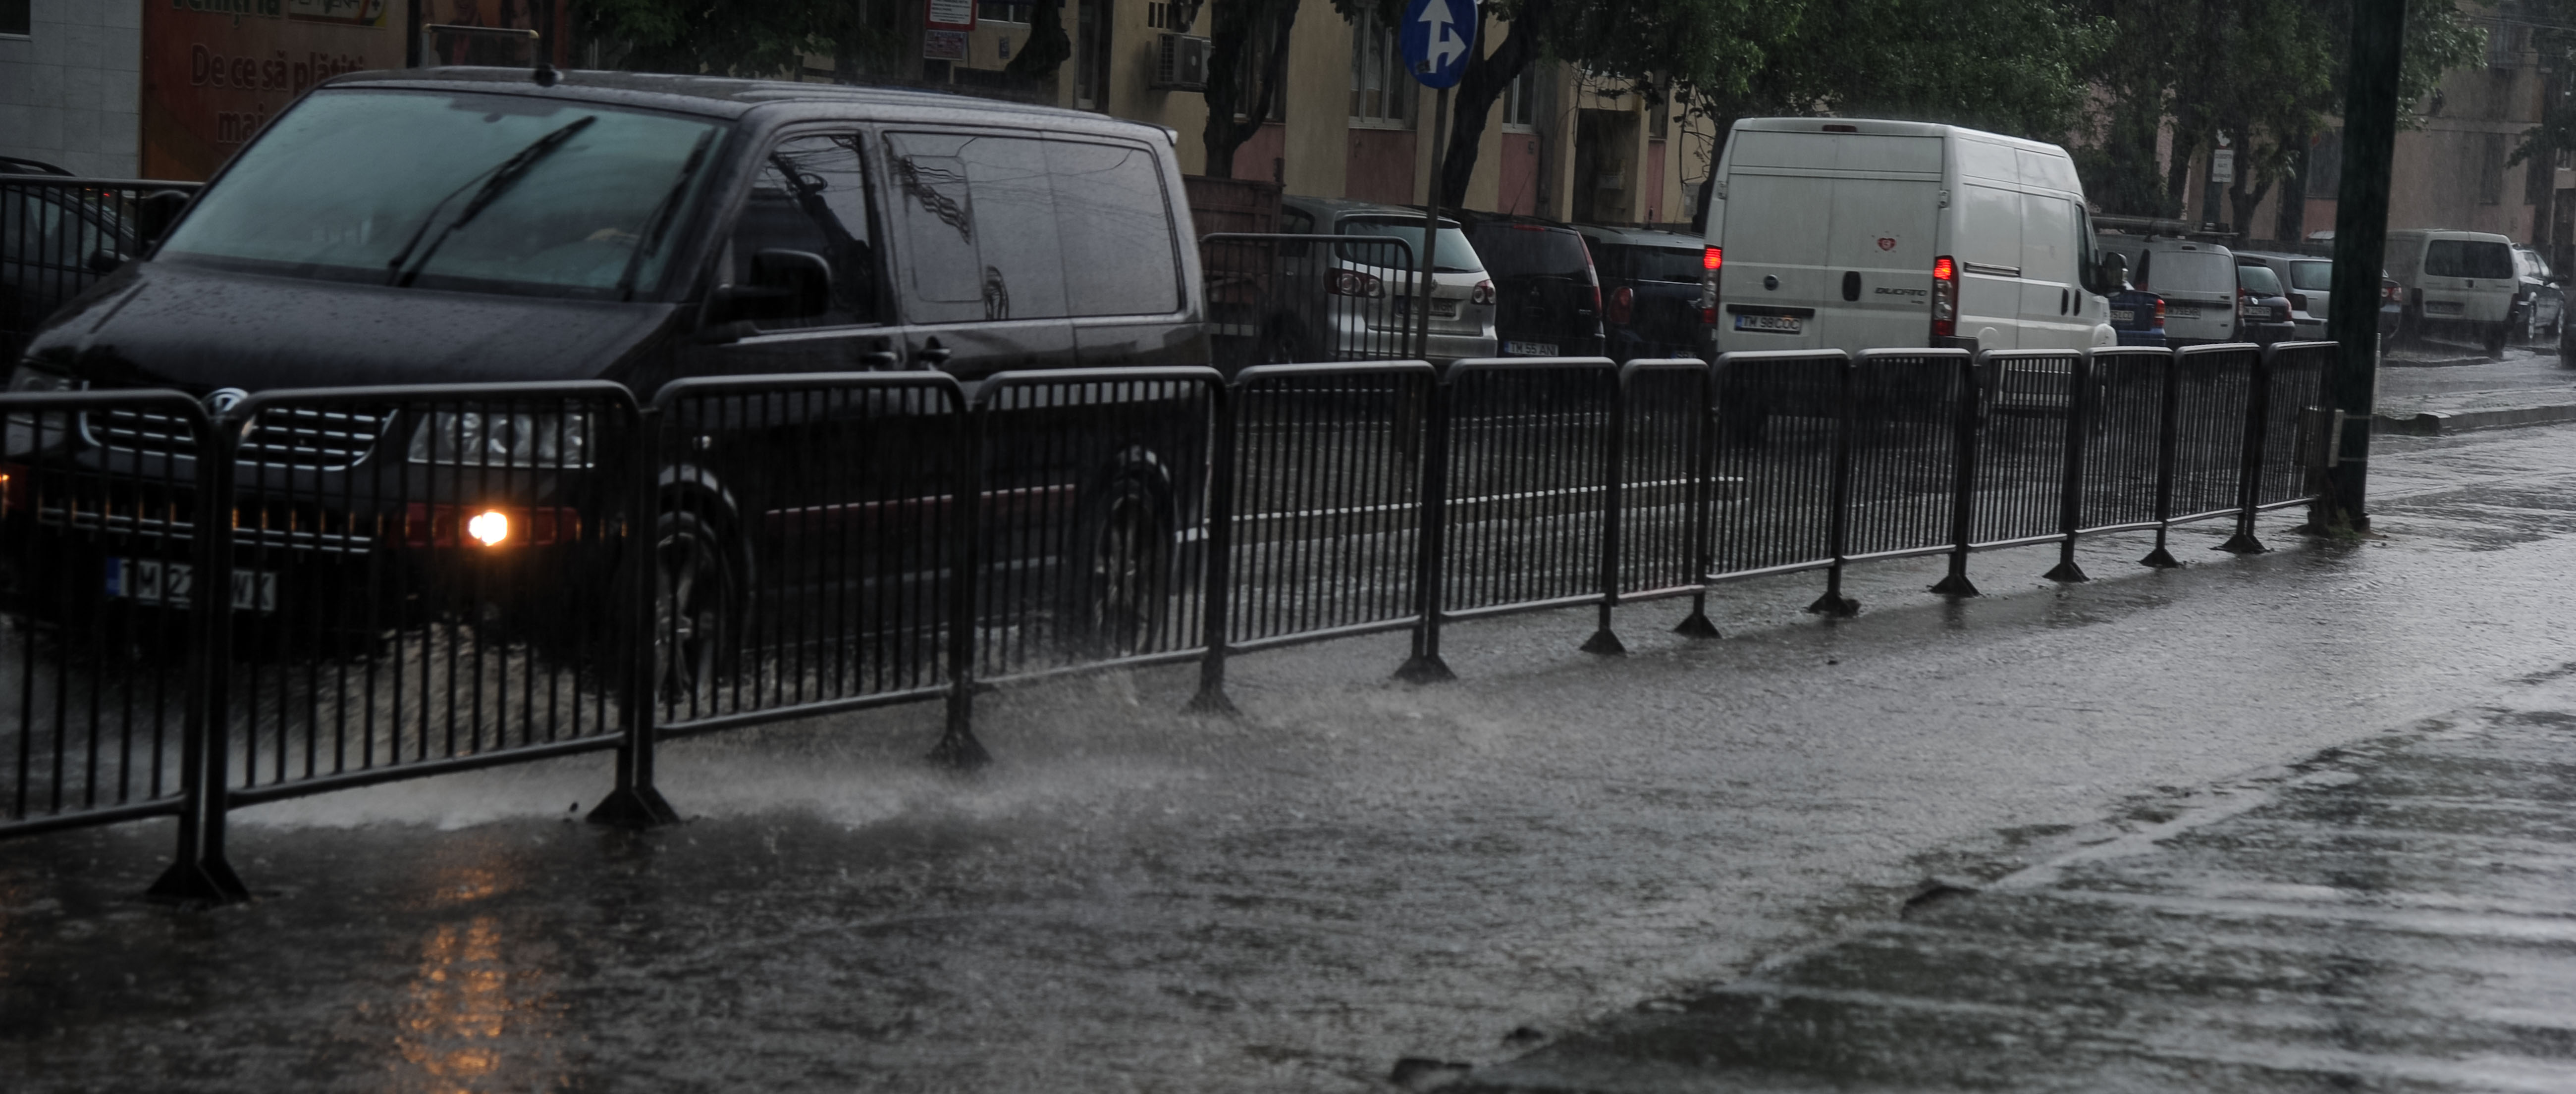 ploaie in Timisoara 04